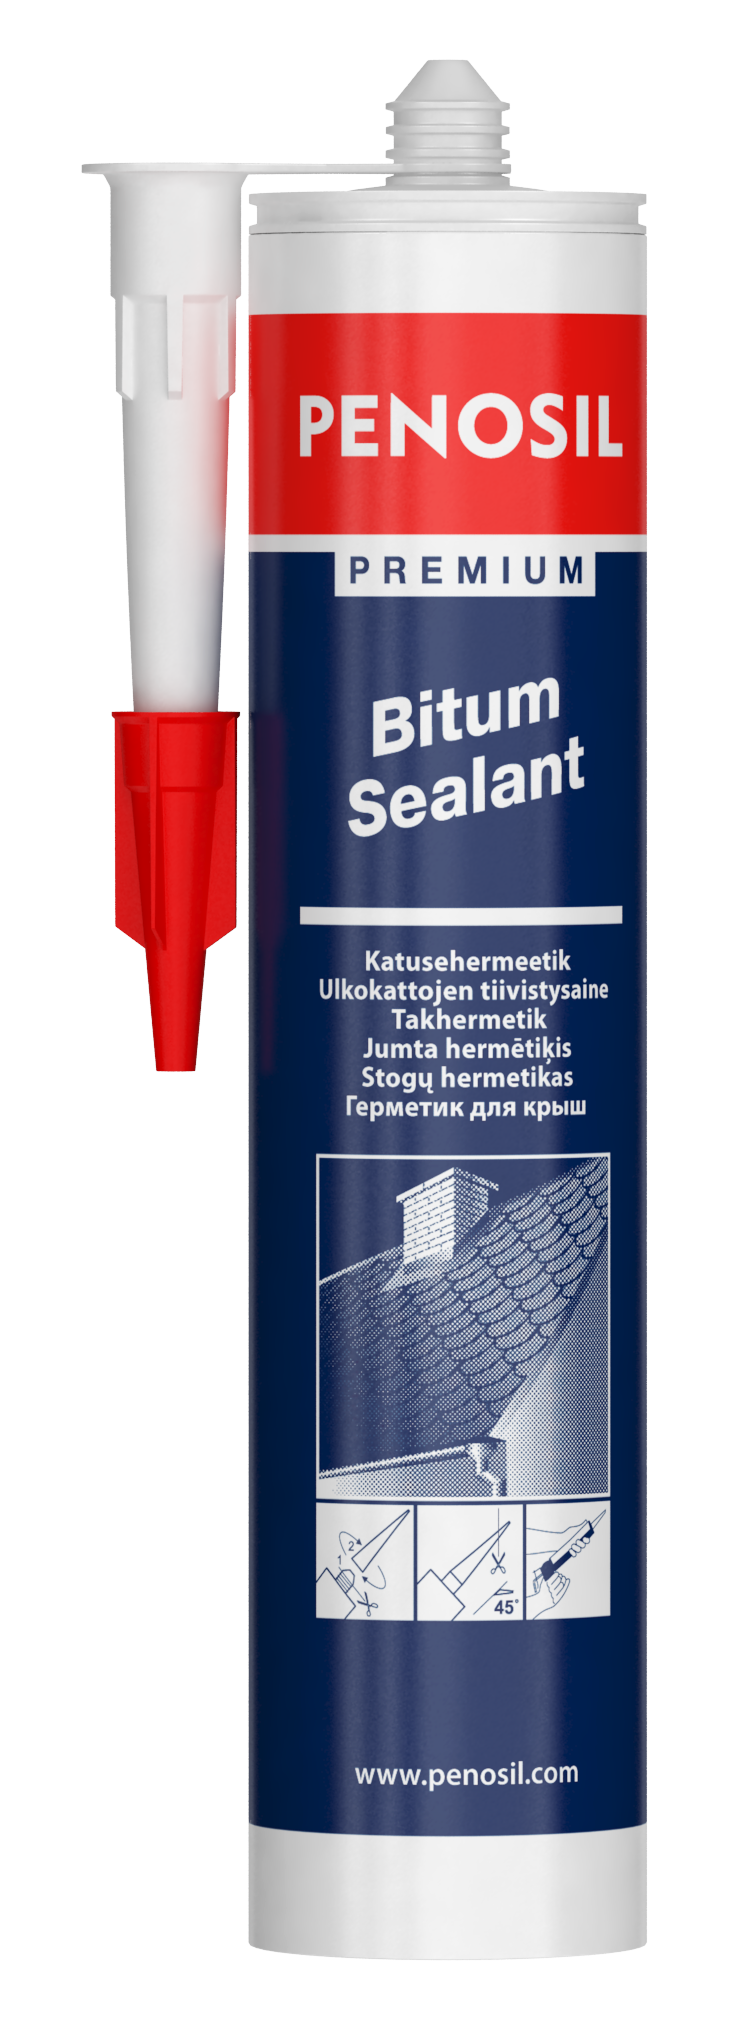 PENOSIL Premium Bitum Sealant - a sealing paste for bituminous surfaces